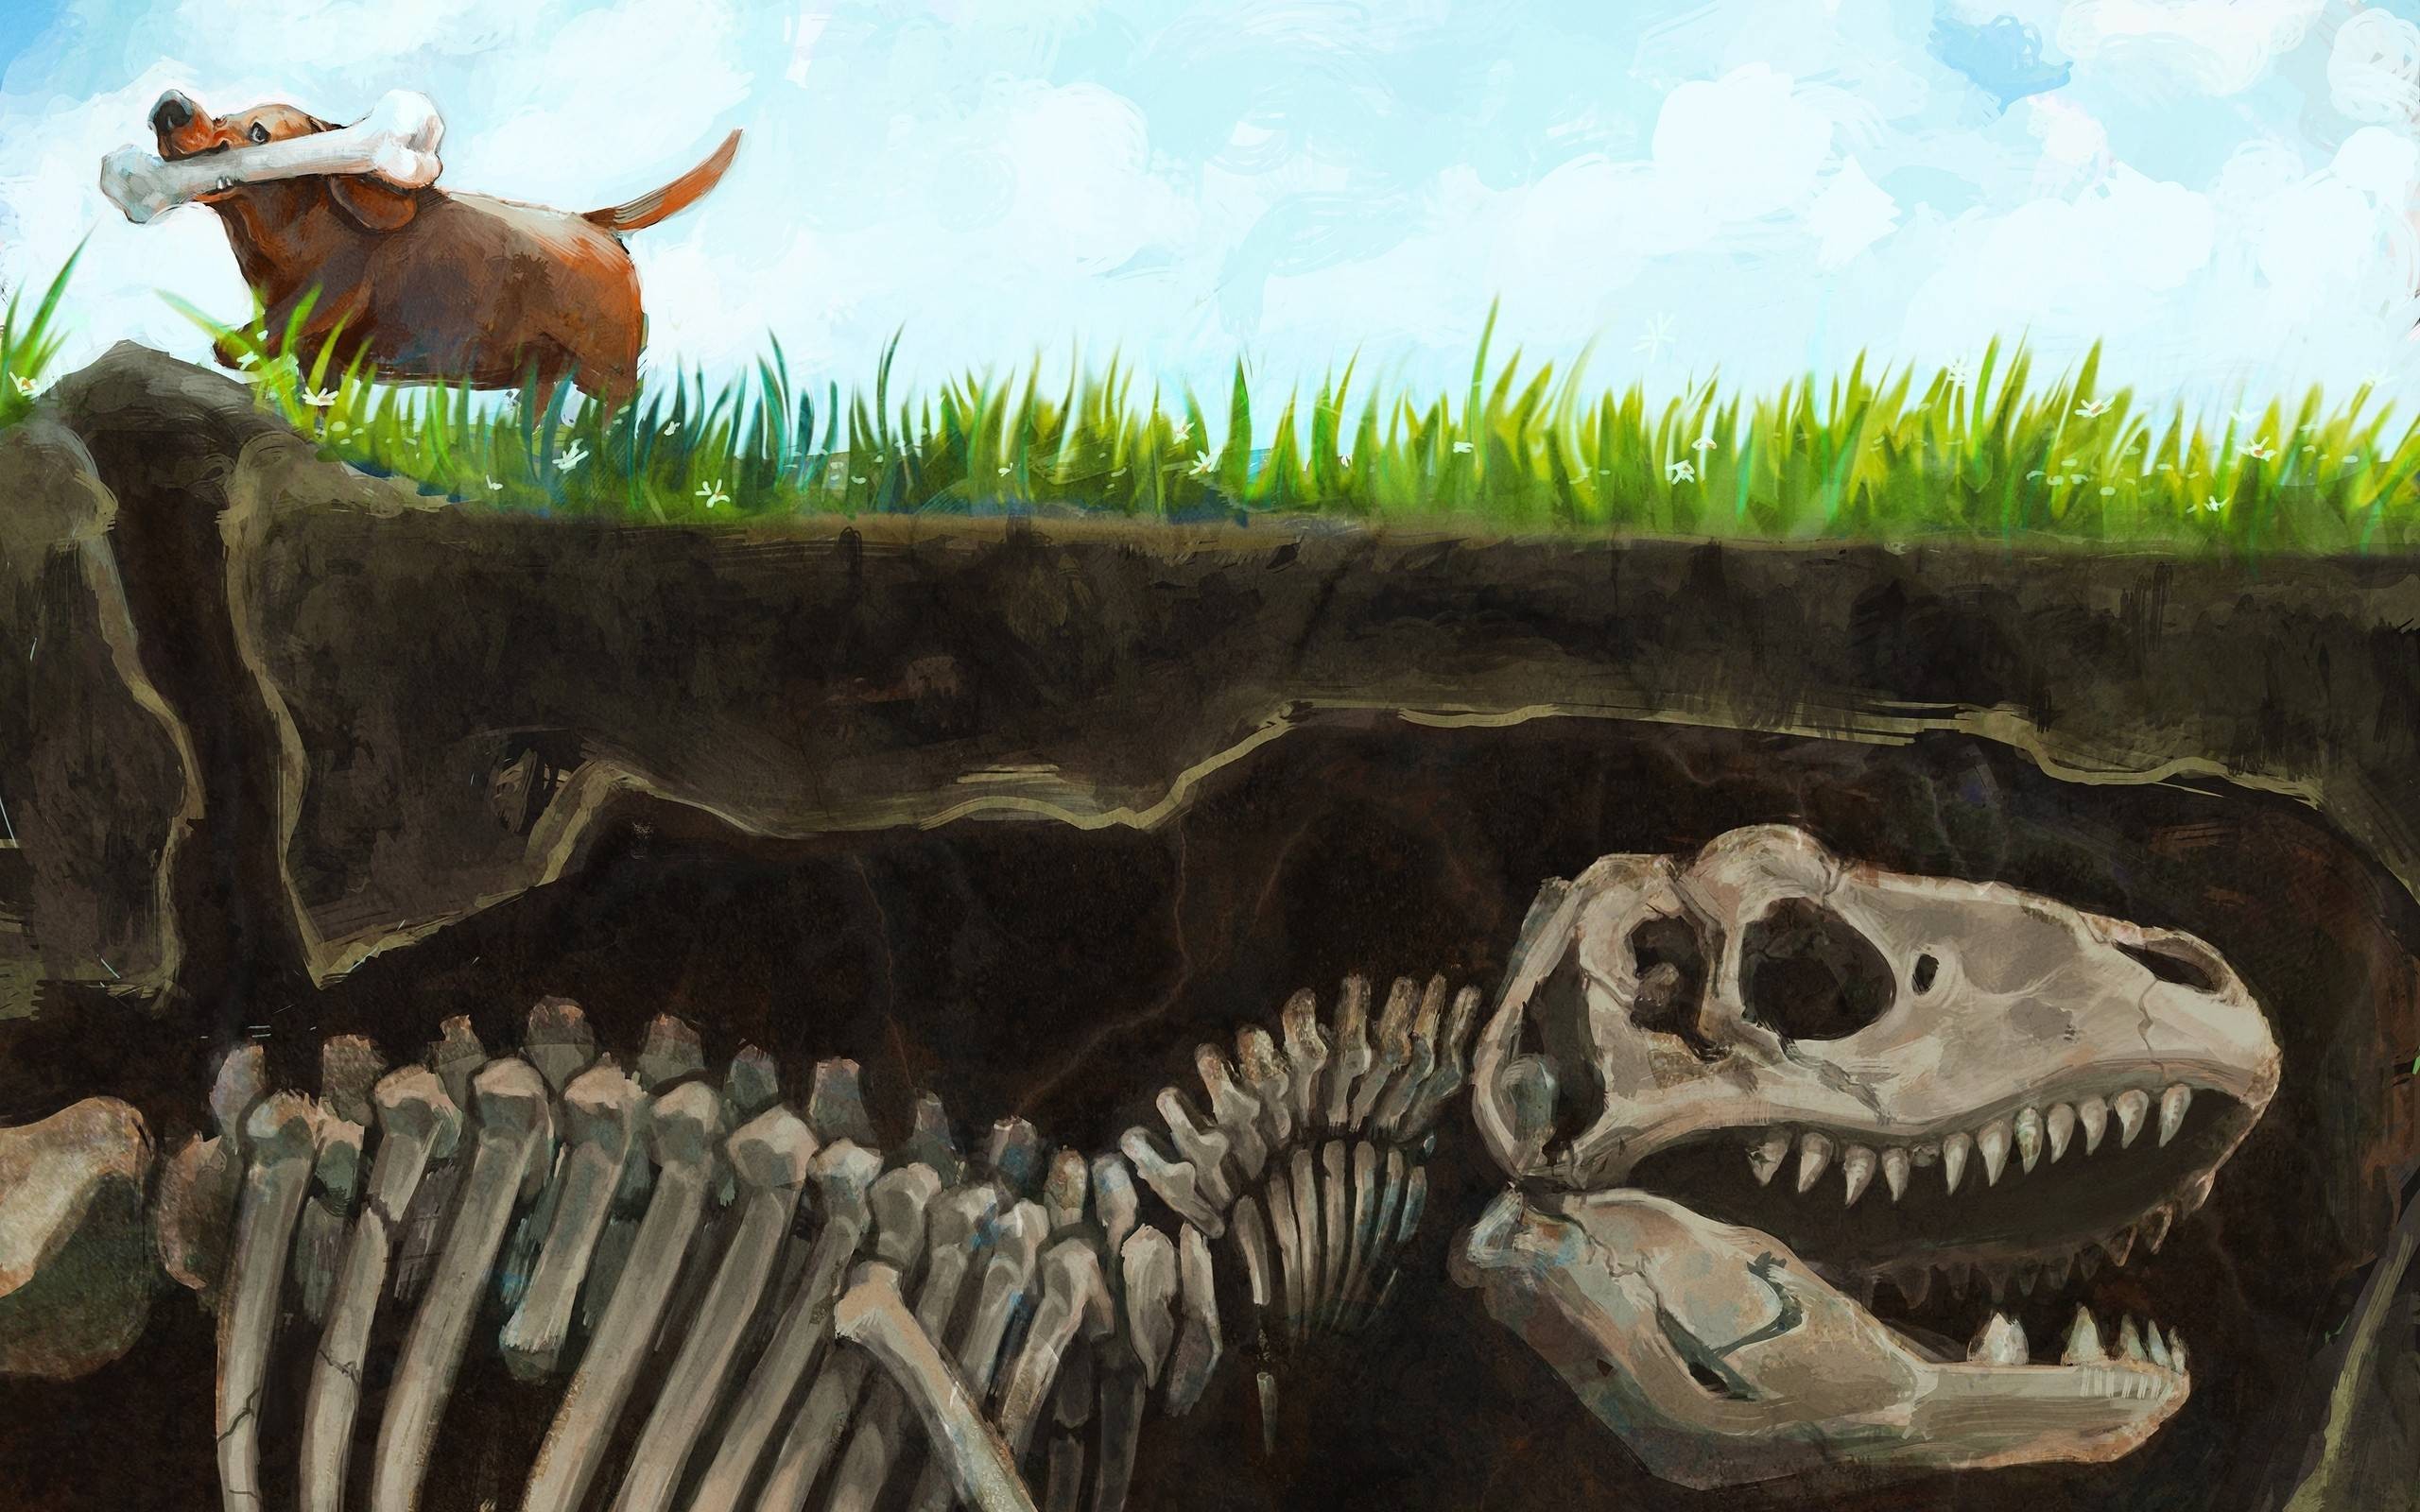 General 2560x1600 artwork dinosaurs dog bones split view evolution animals humor